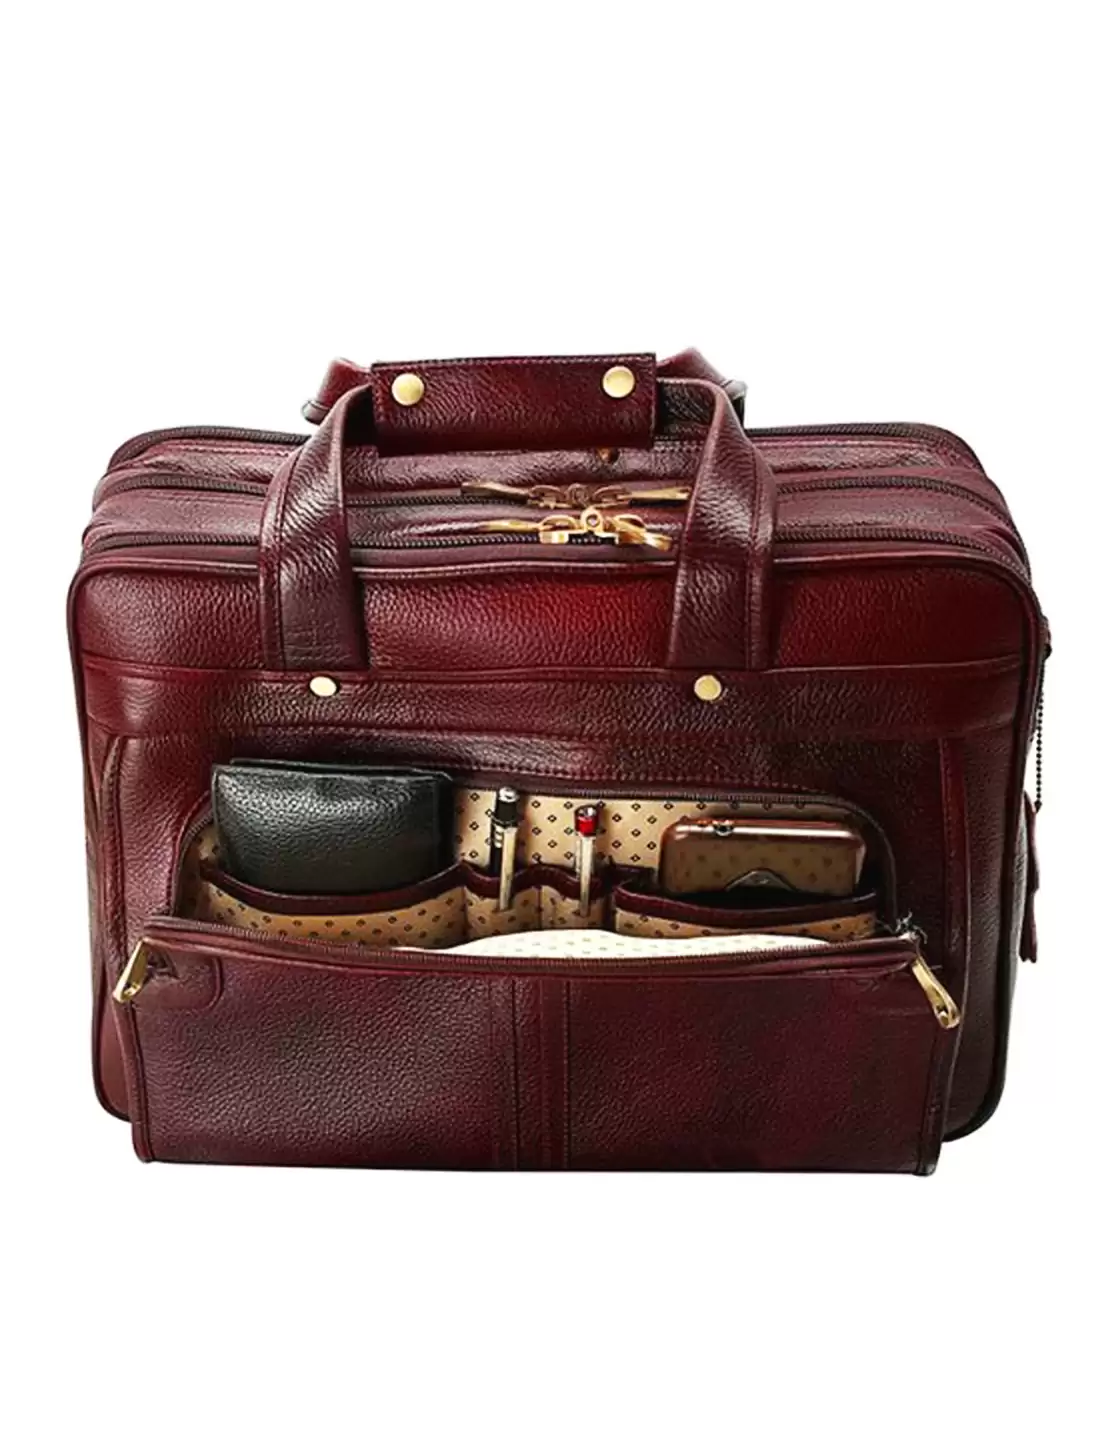 Predator Leather Satchel Office Briefcase Laptop Bag 15